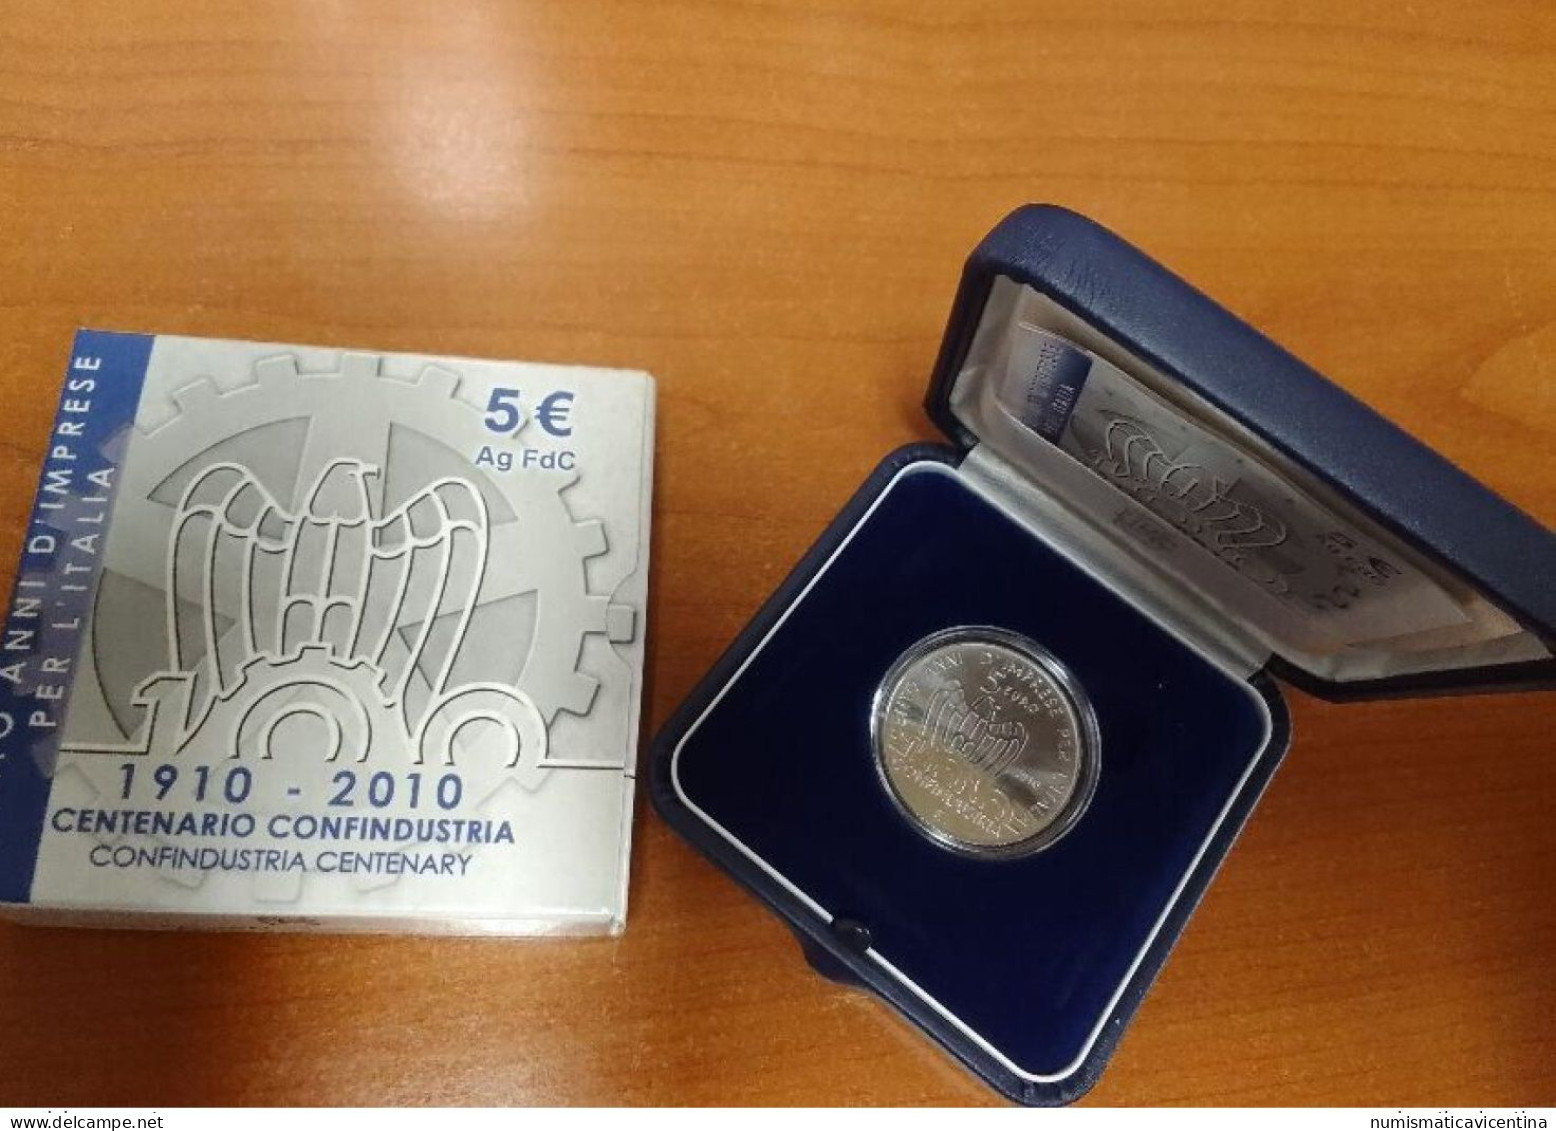 Italia 5 Euro 2010 CONFINDUSTRIA Centenario € Silver Coin UNC PROOF - Italy